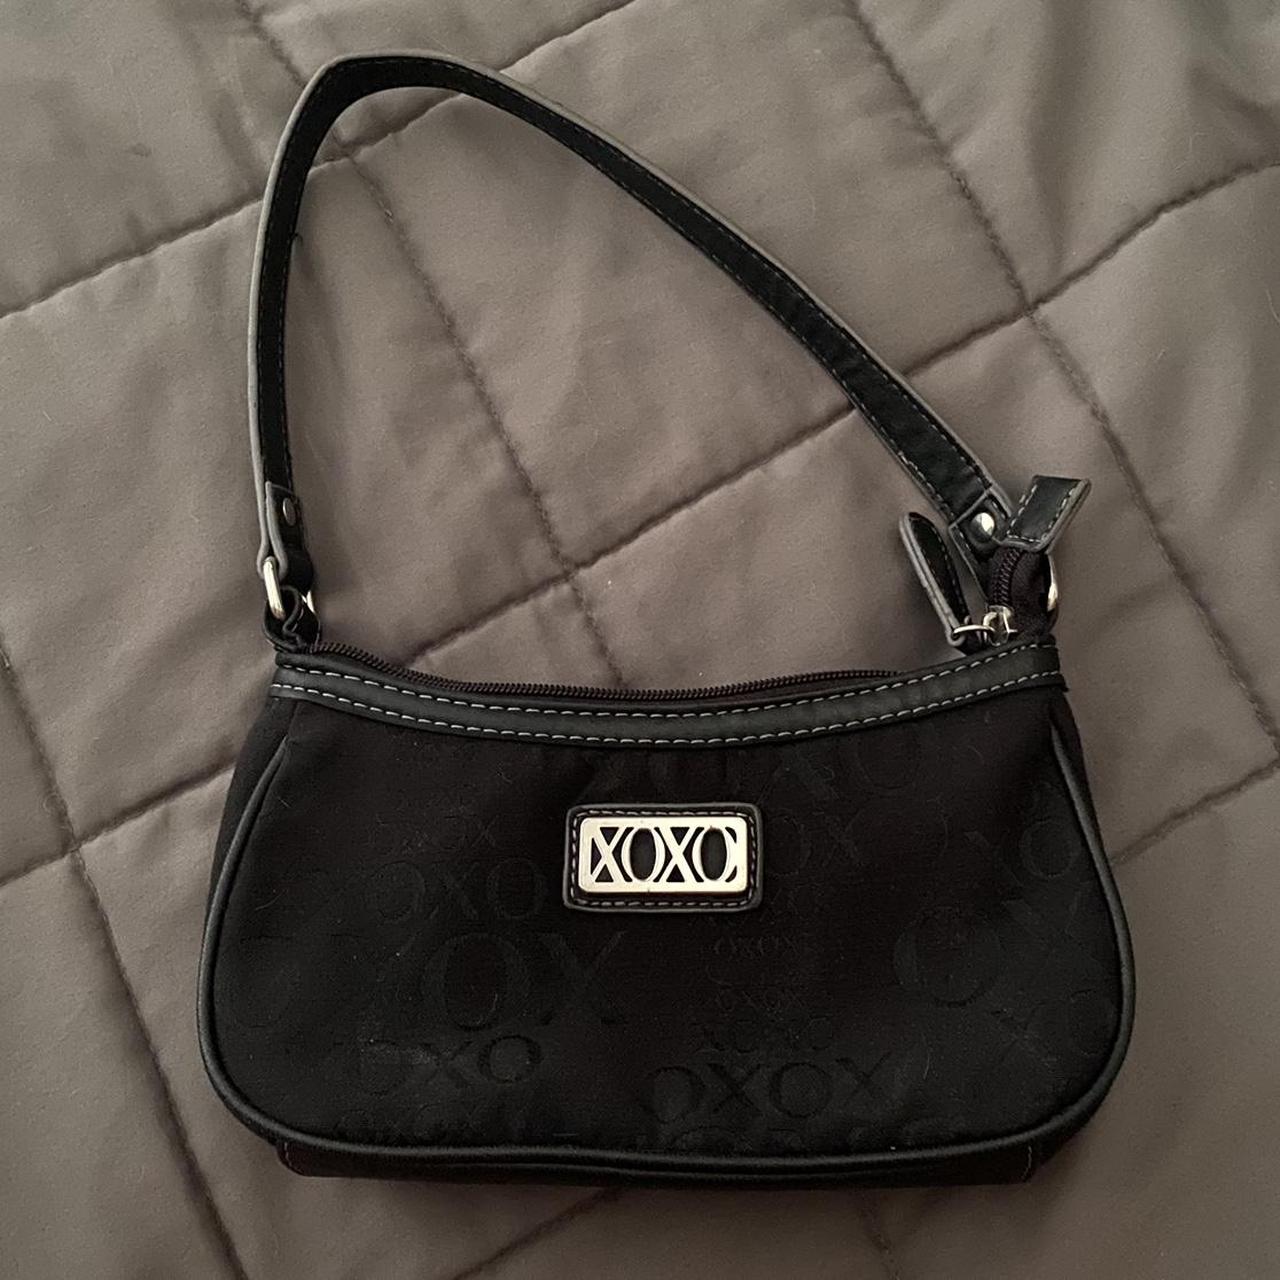 XOXO Women's Black and Silver Bag